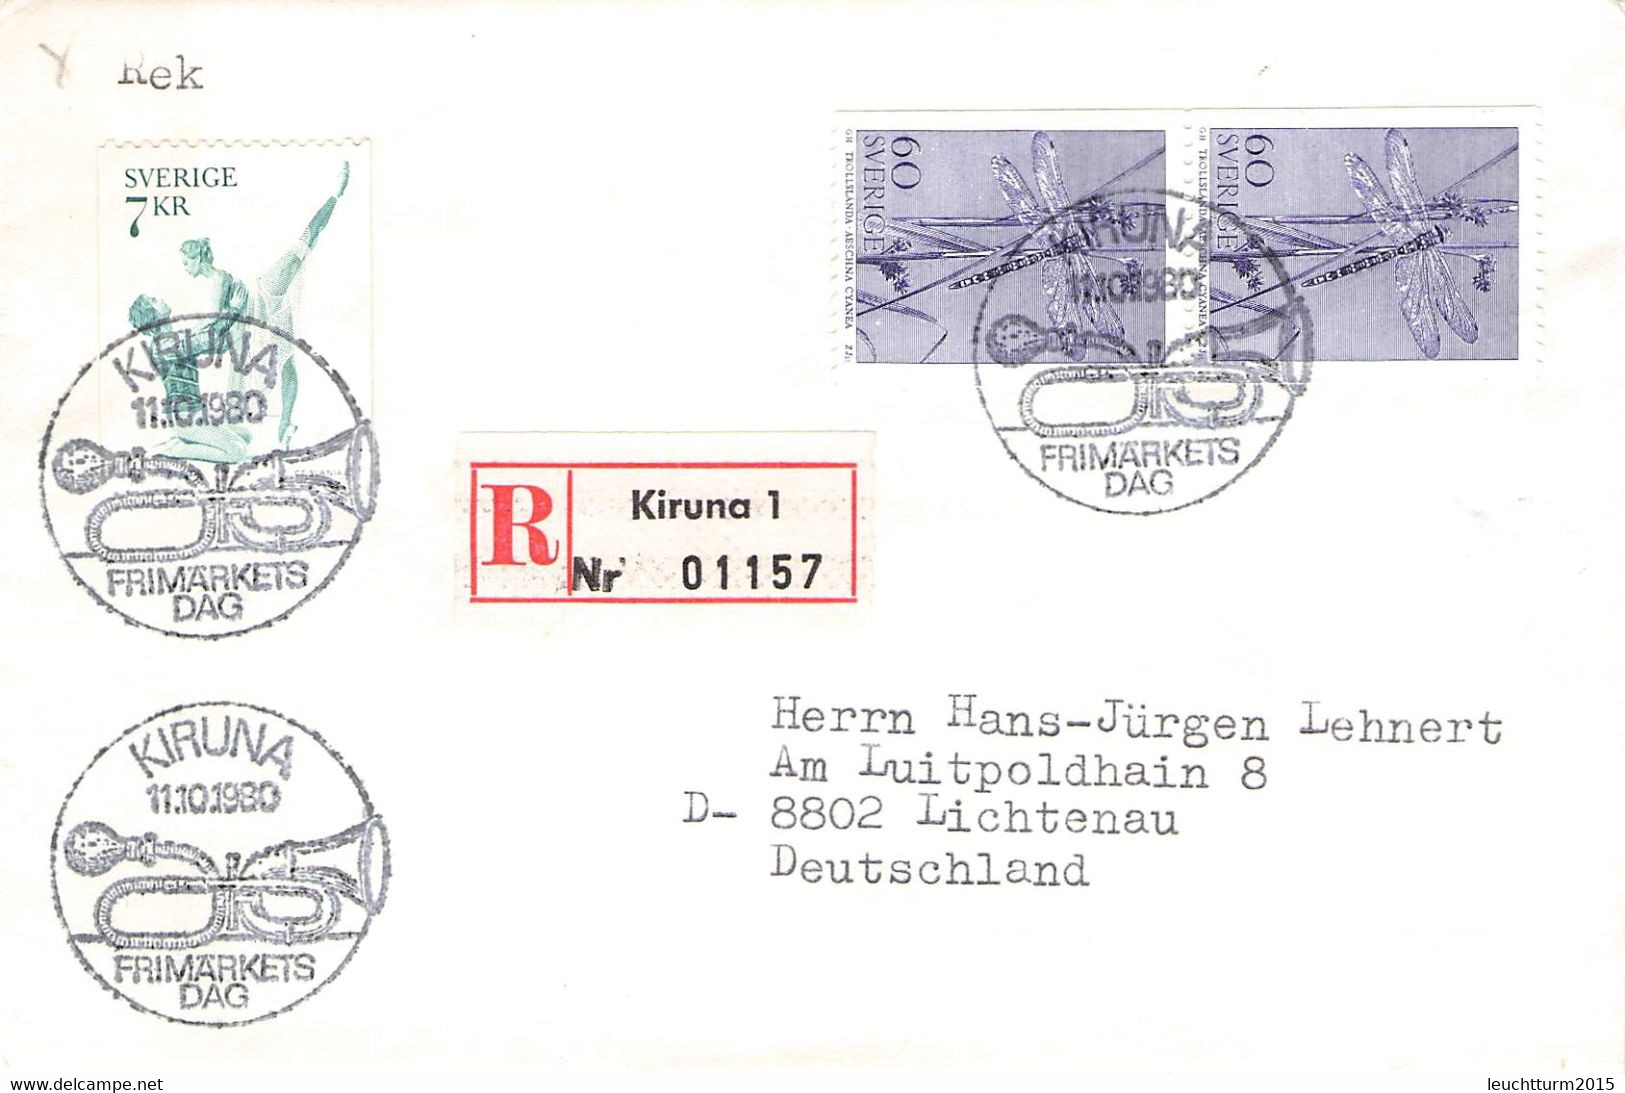 SWEDEN - REGISTERED MAIL 1980 KIRUNA > GERMANY / ZL271 - Covers & Documents